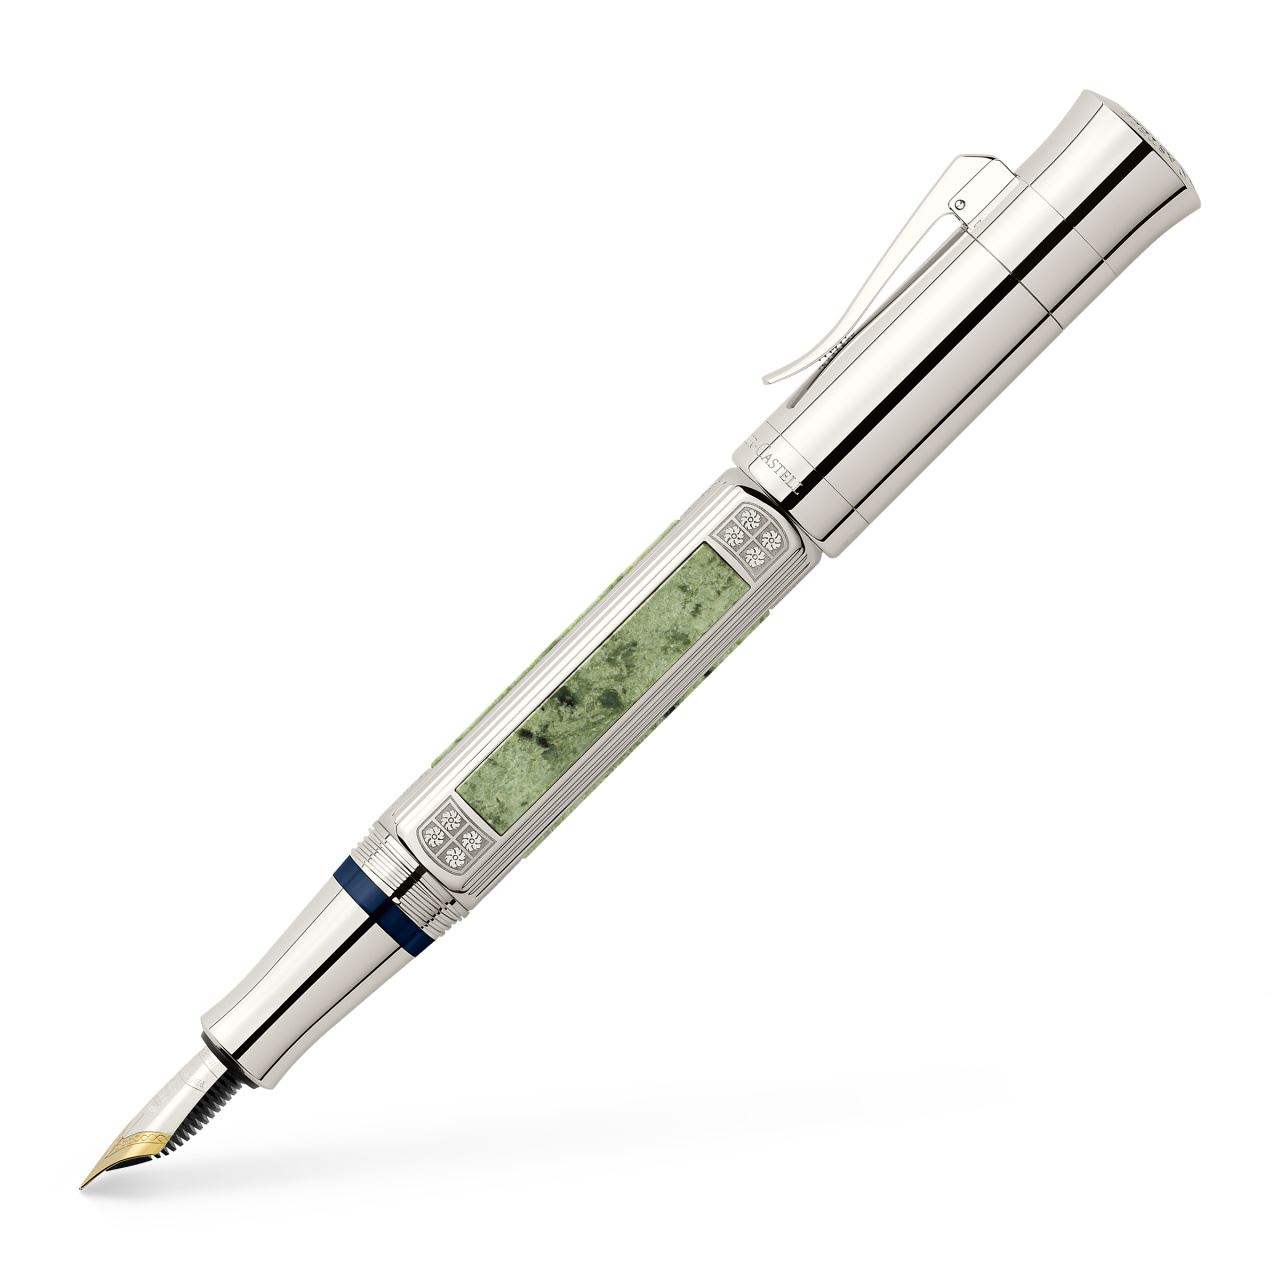 Graf-von-Faber-Castell - Fountain pen, Pen of the Year 2015 platinum-plated, Medium